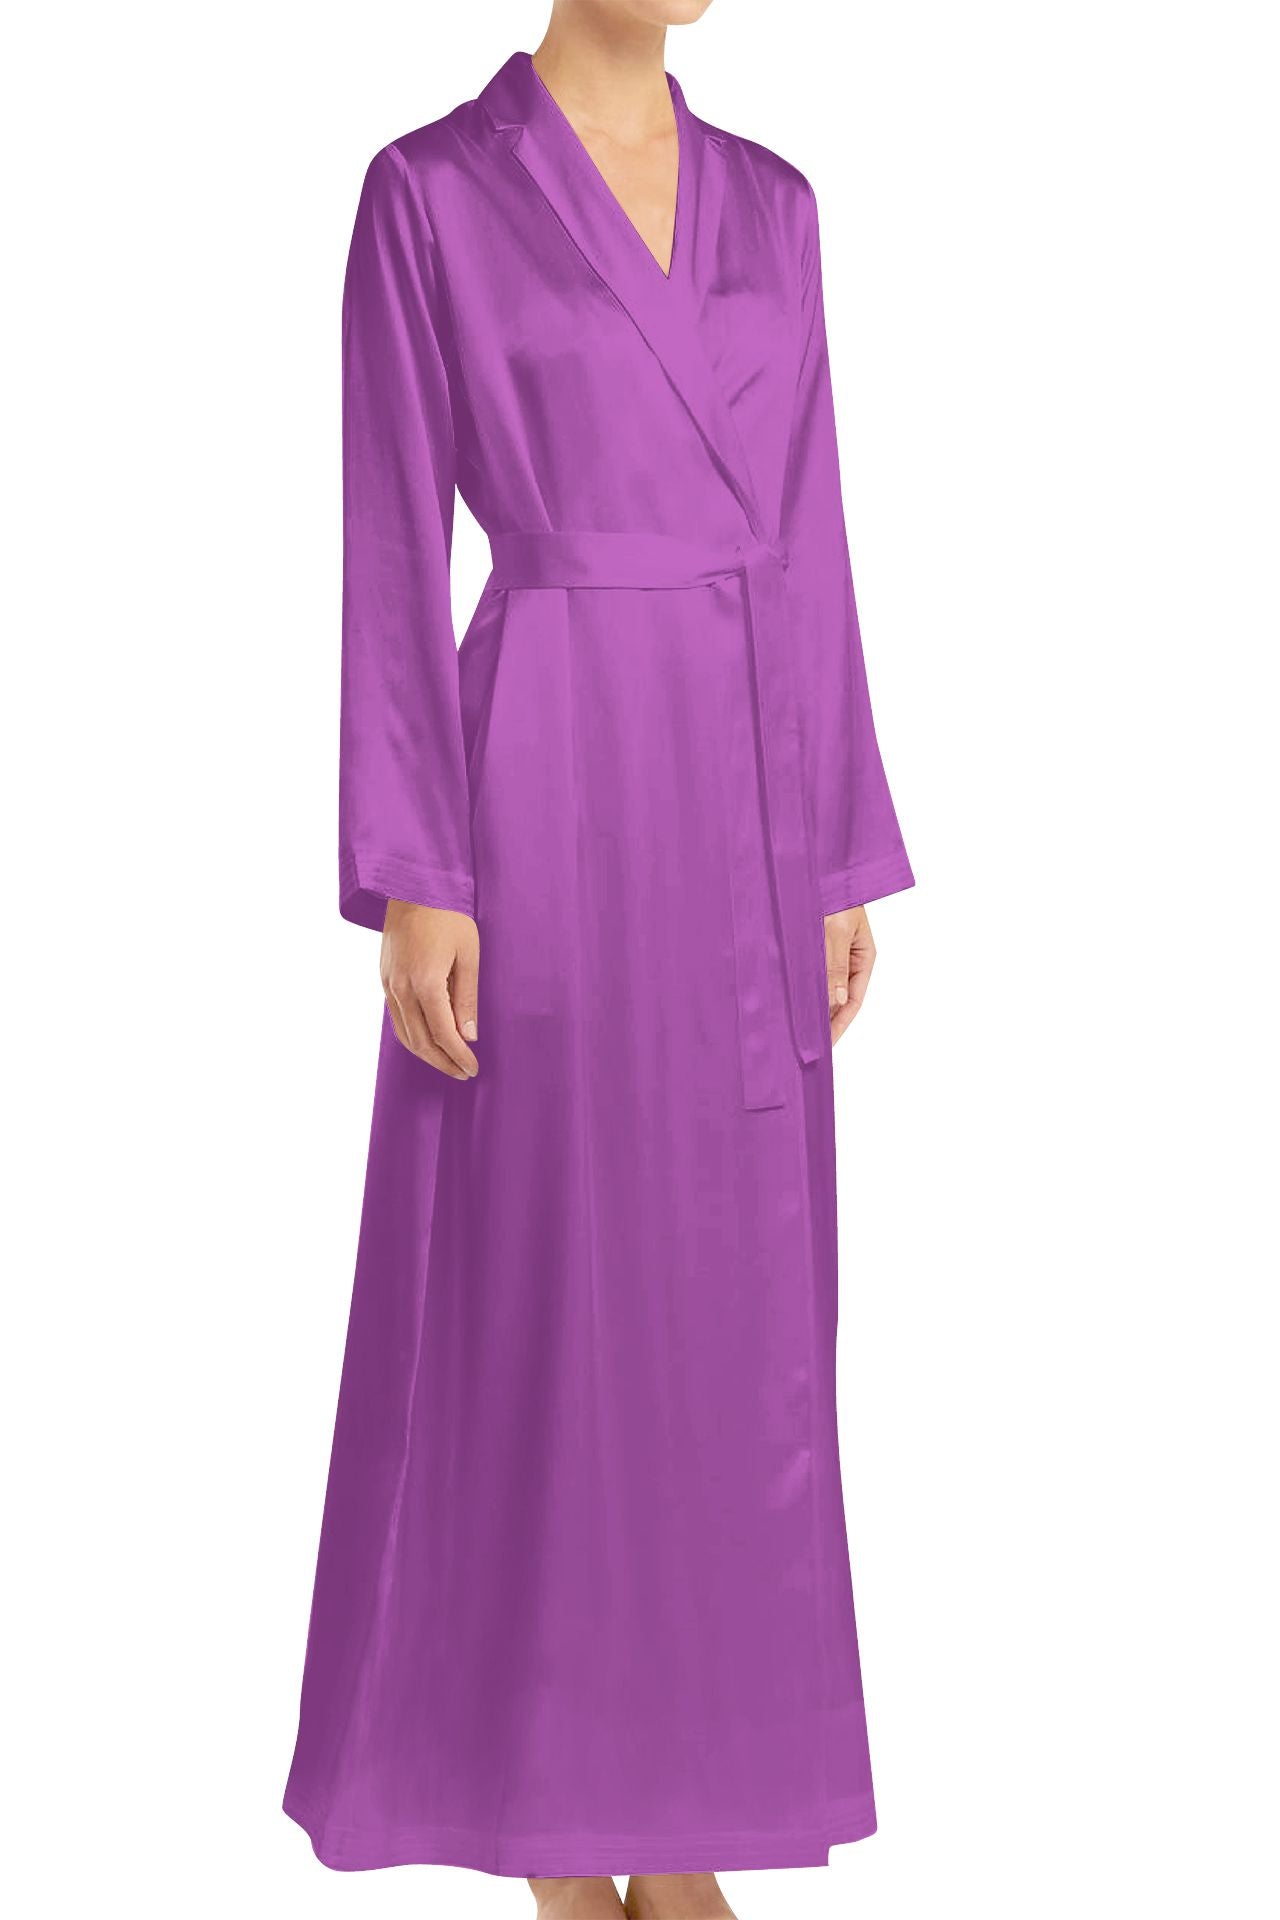 "maxi womens wrap dress" "purple satin wrap dress" "Kyle X Shahida" "purple maxi wrap dress"